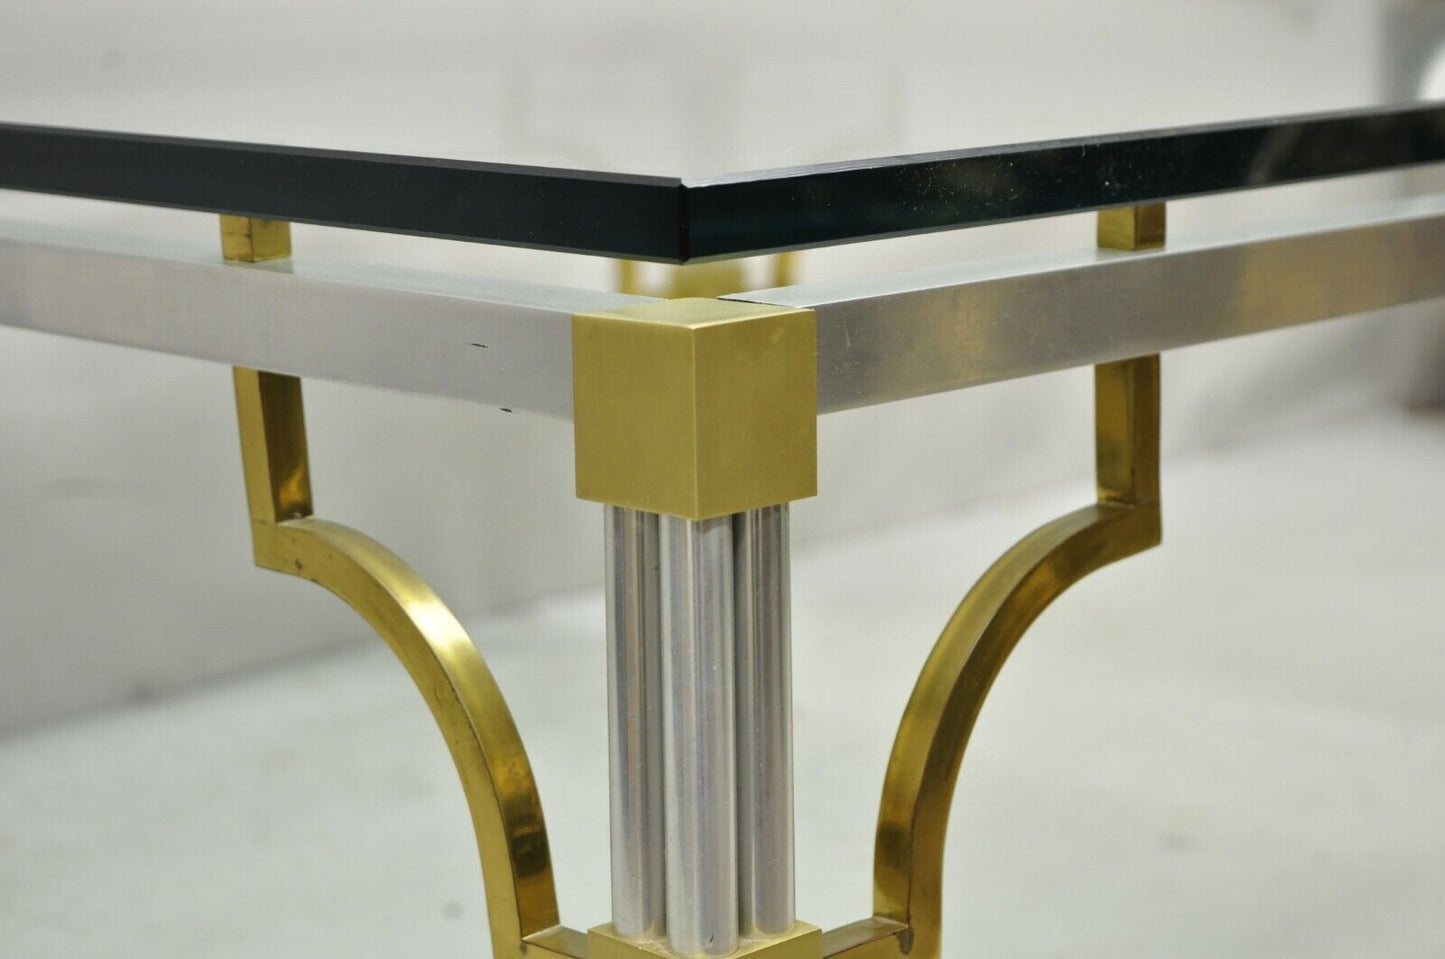 Maison Jansen Style Brushed Aluminum Brass Greek Key Fretwork Glass Coffee Table